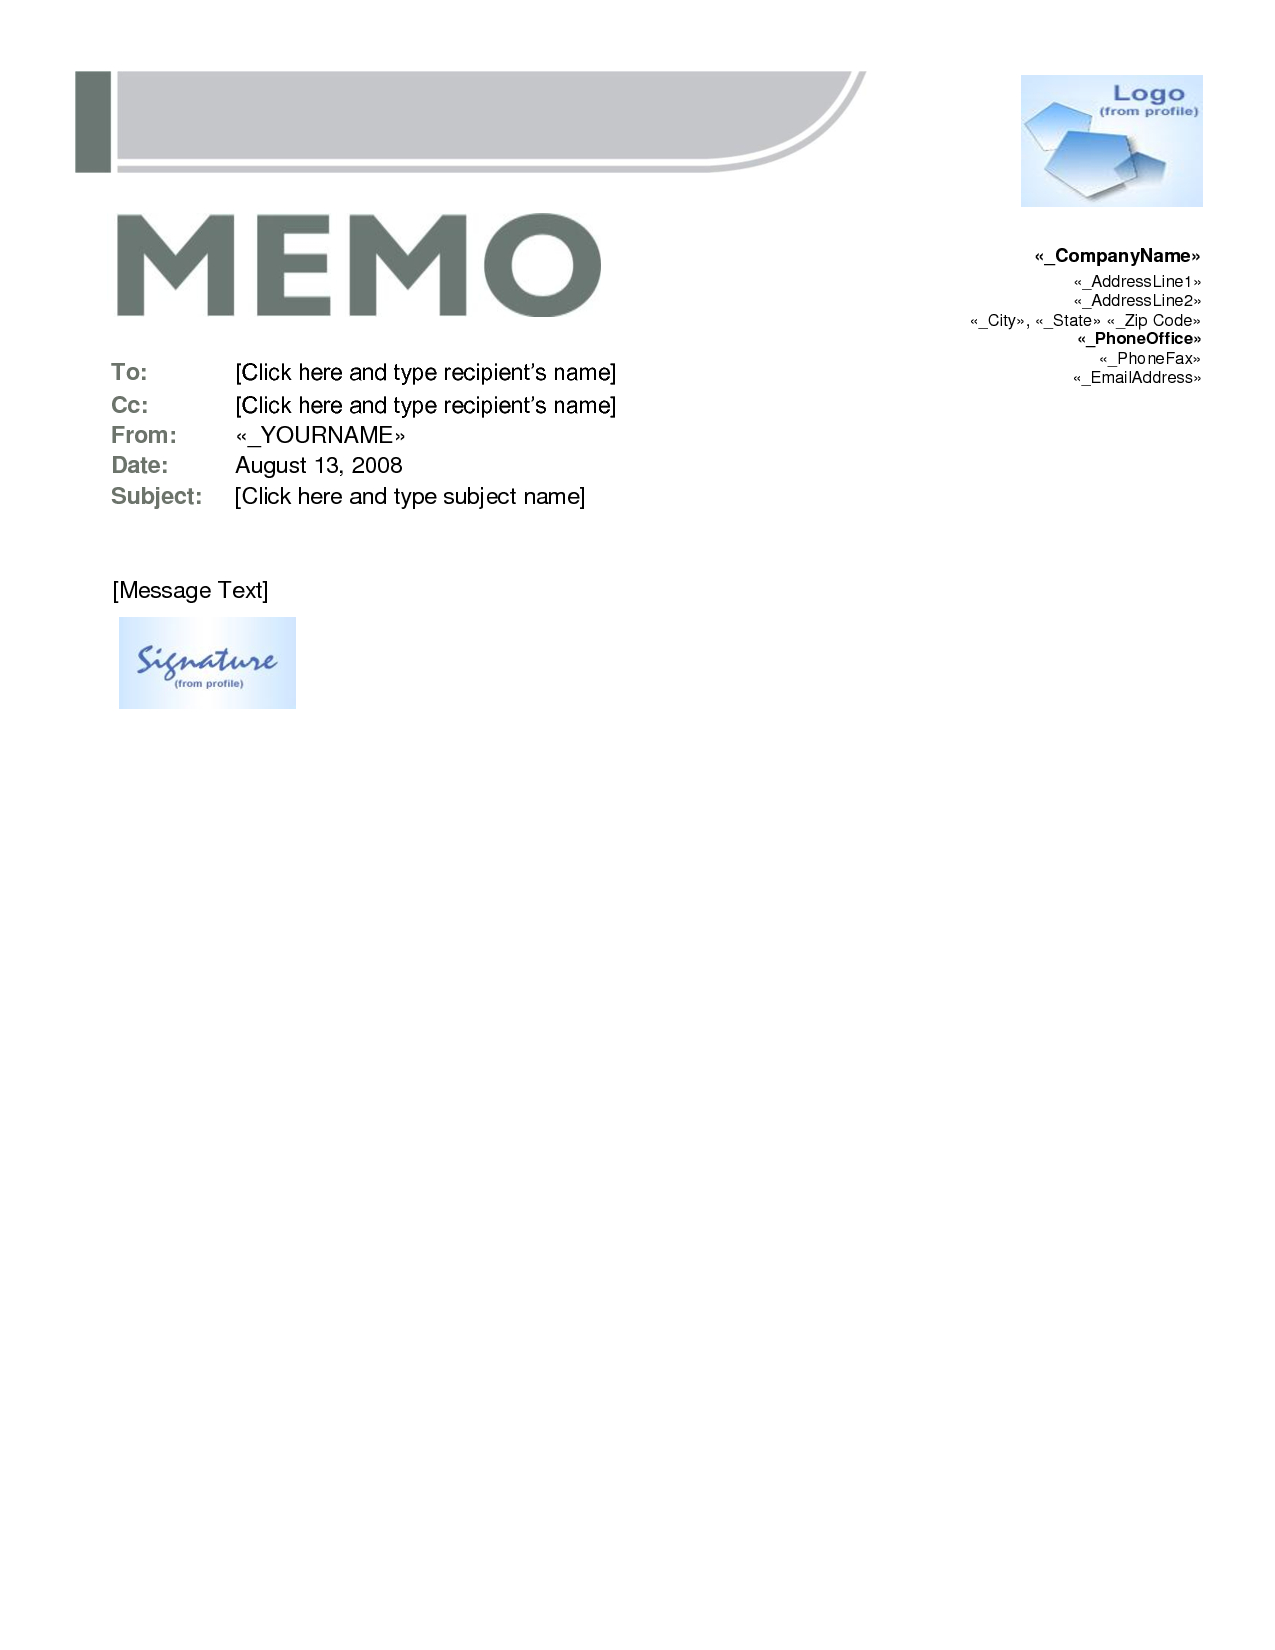 Memo Template Word | E Commercewordpress Pertaining To Memo Template Word 2013